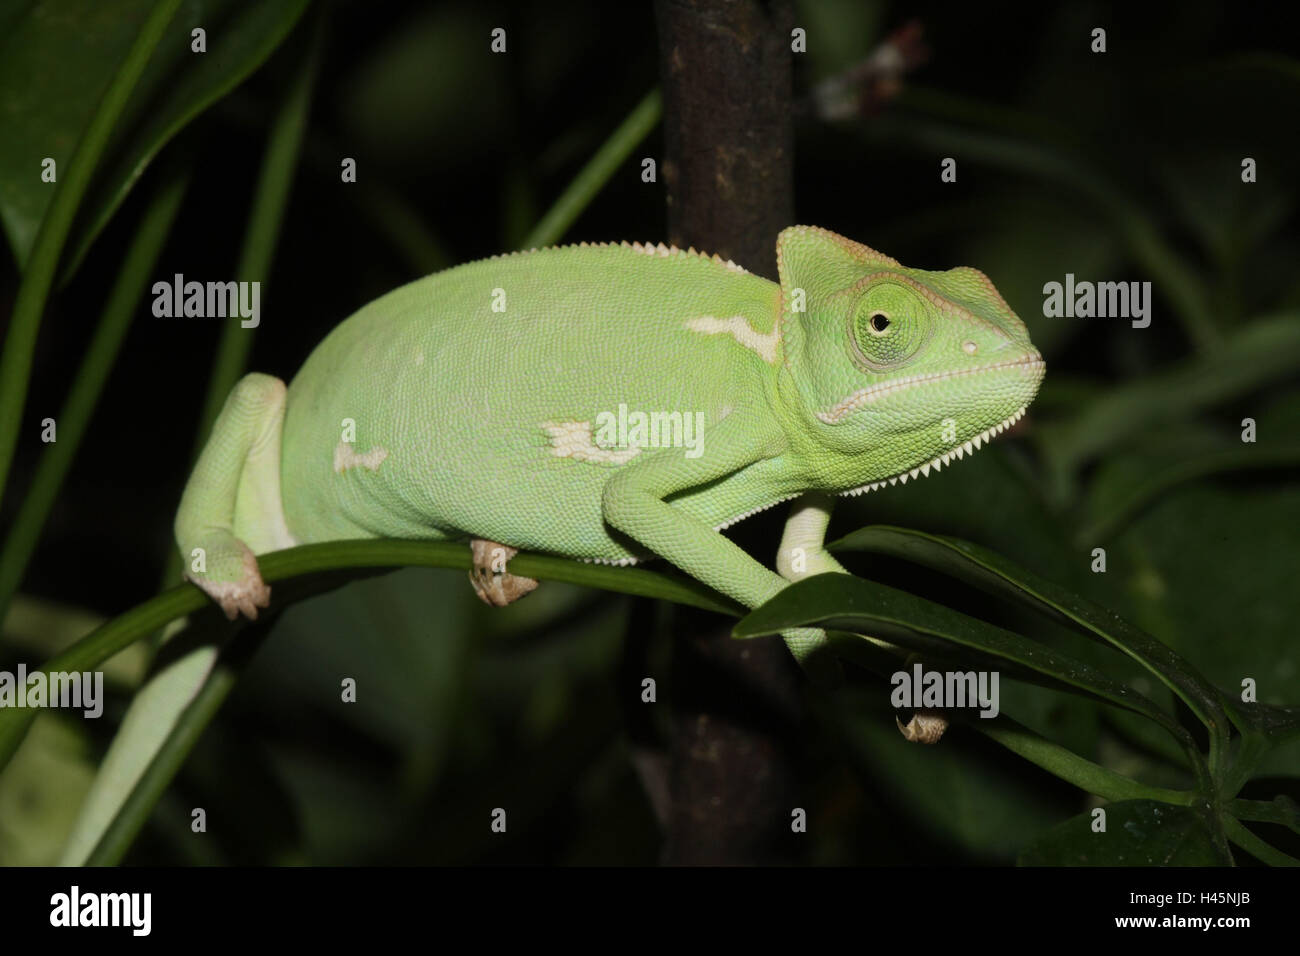 Yemen chameleon, Chamaeleo calyptratus, Stock Photo